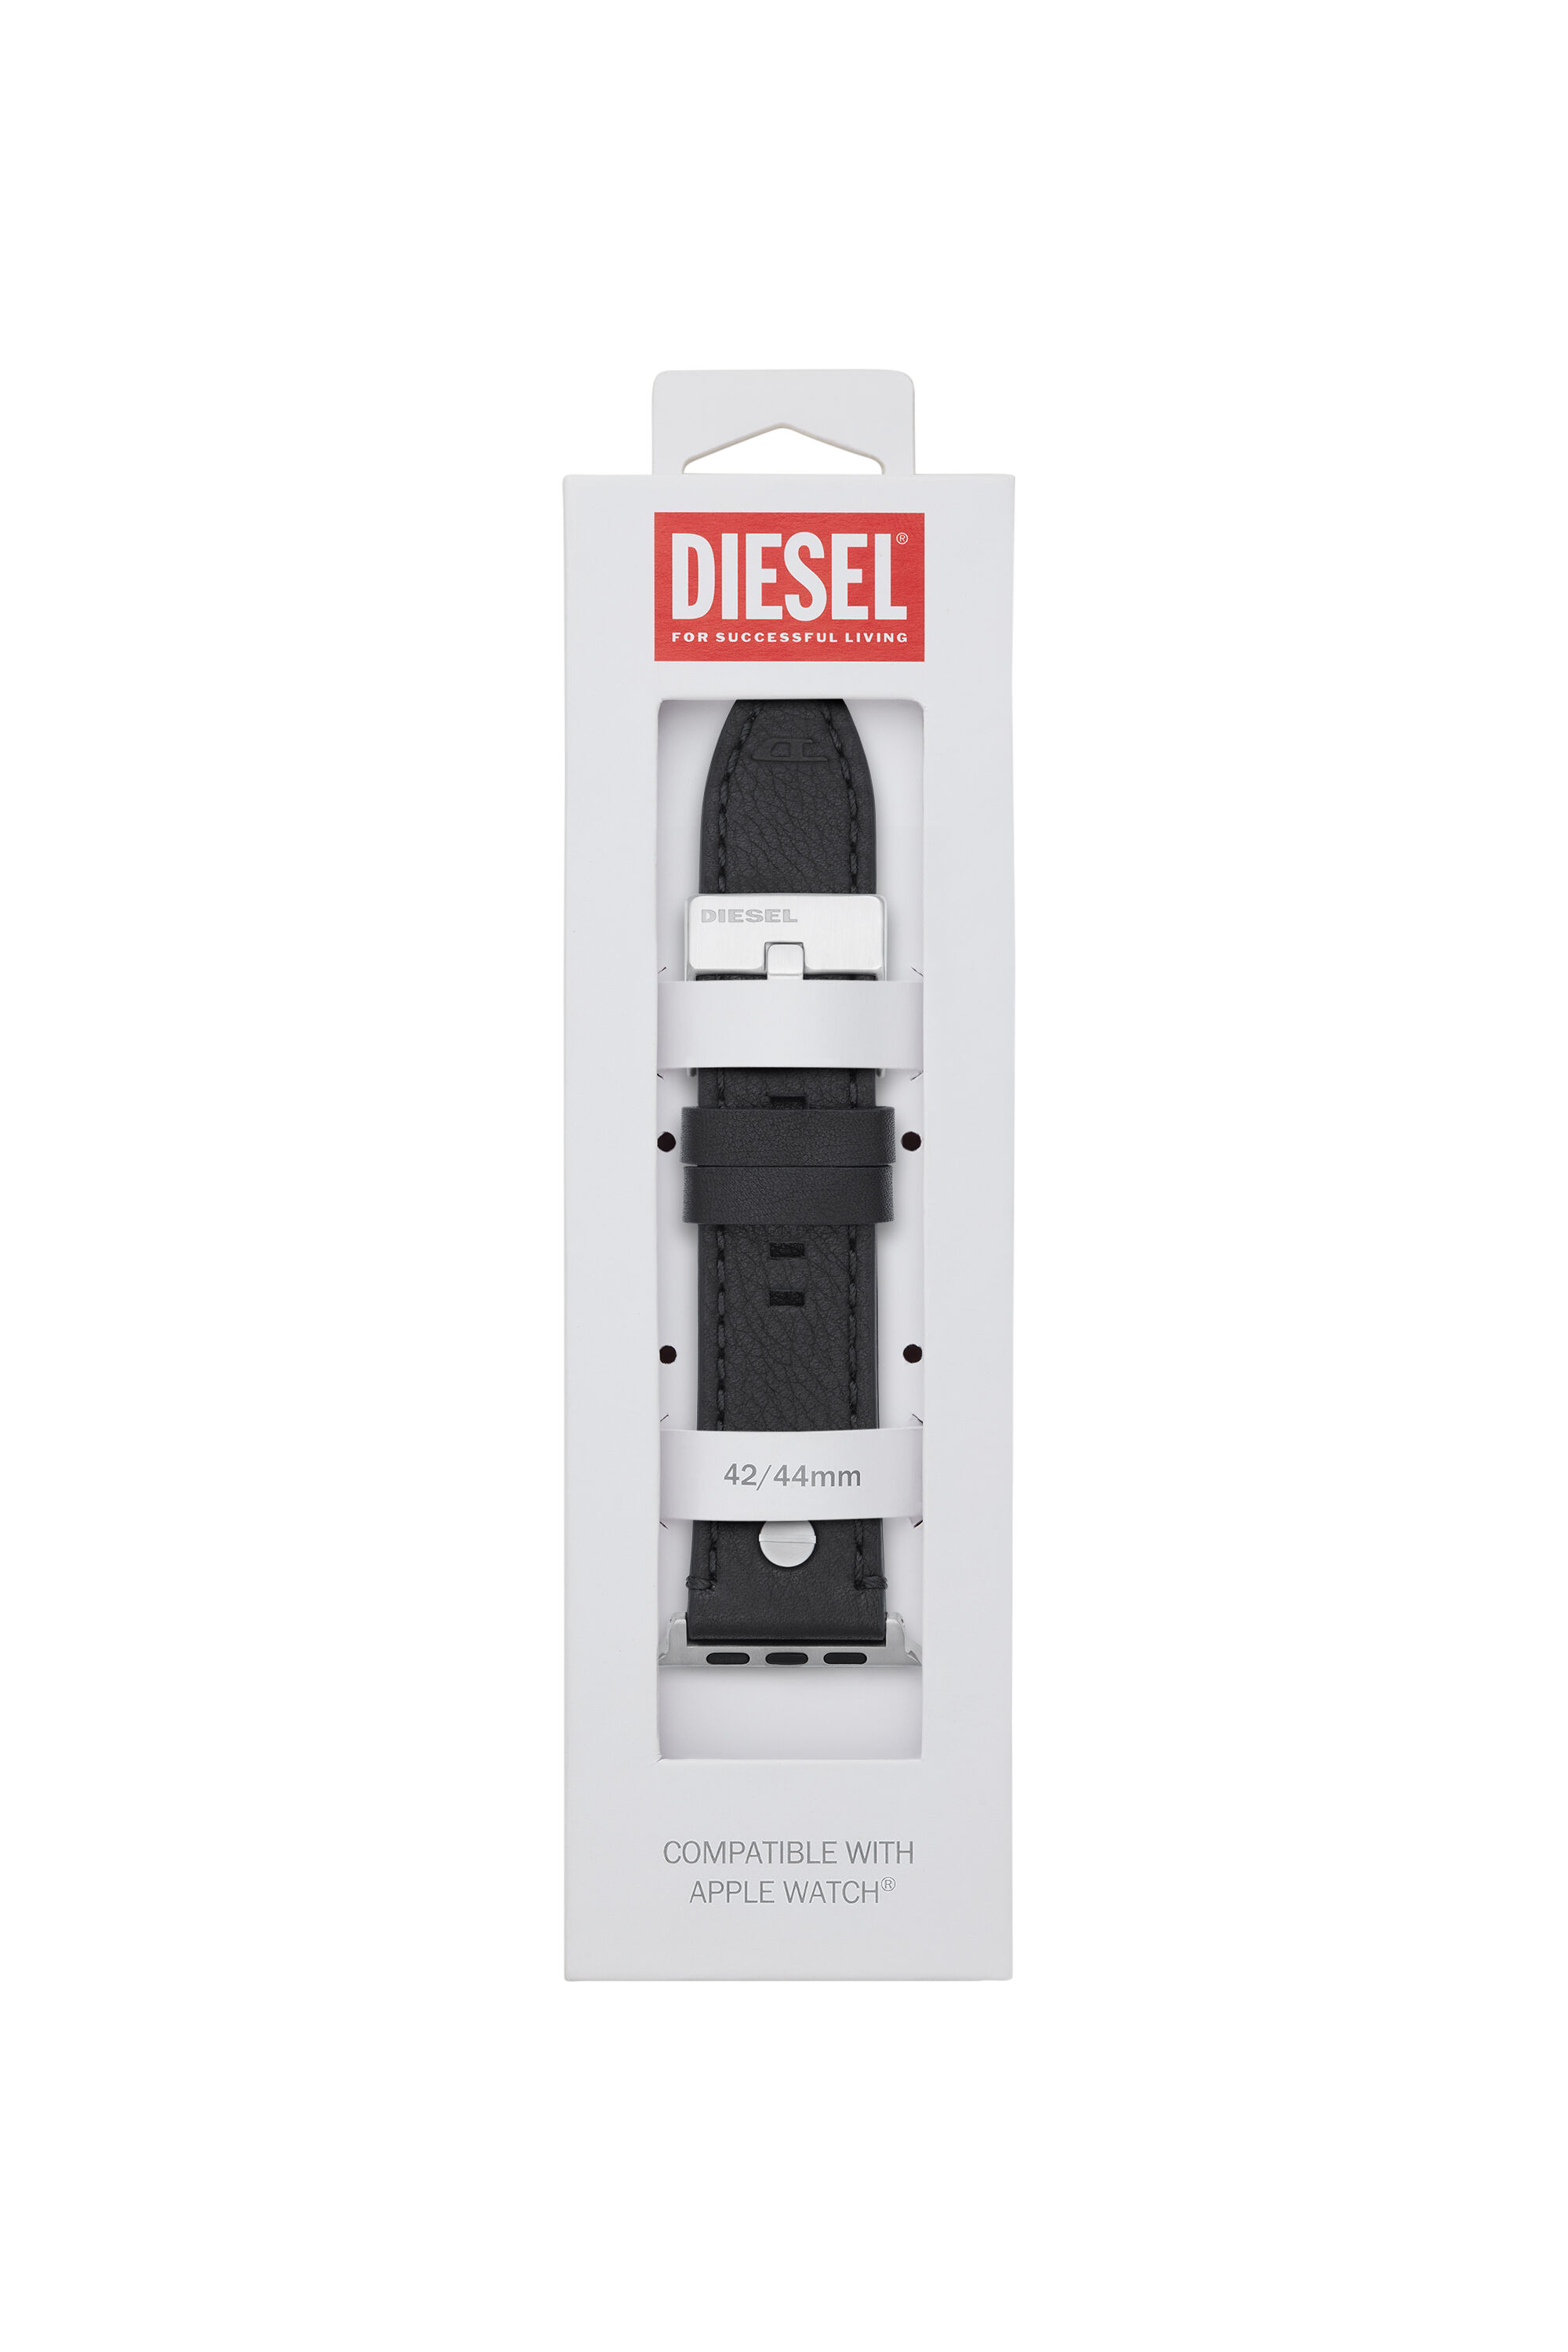 Diesel - DSS001, ブラック - Image 2